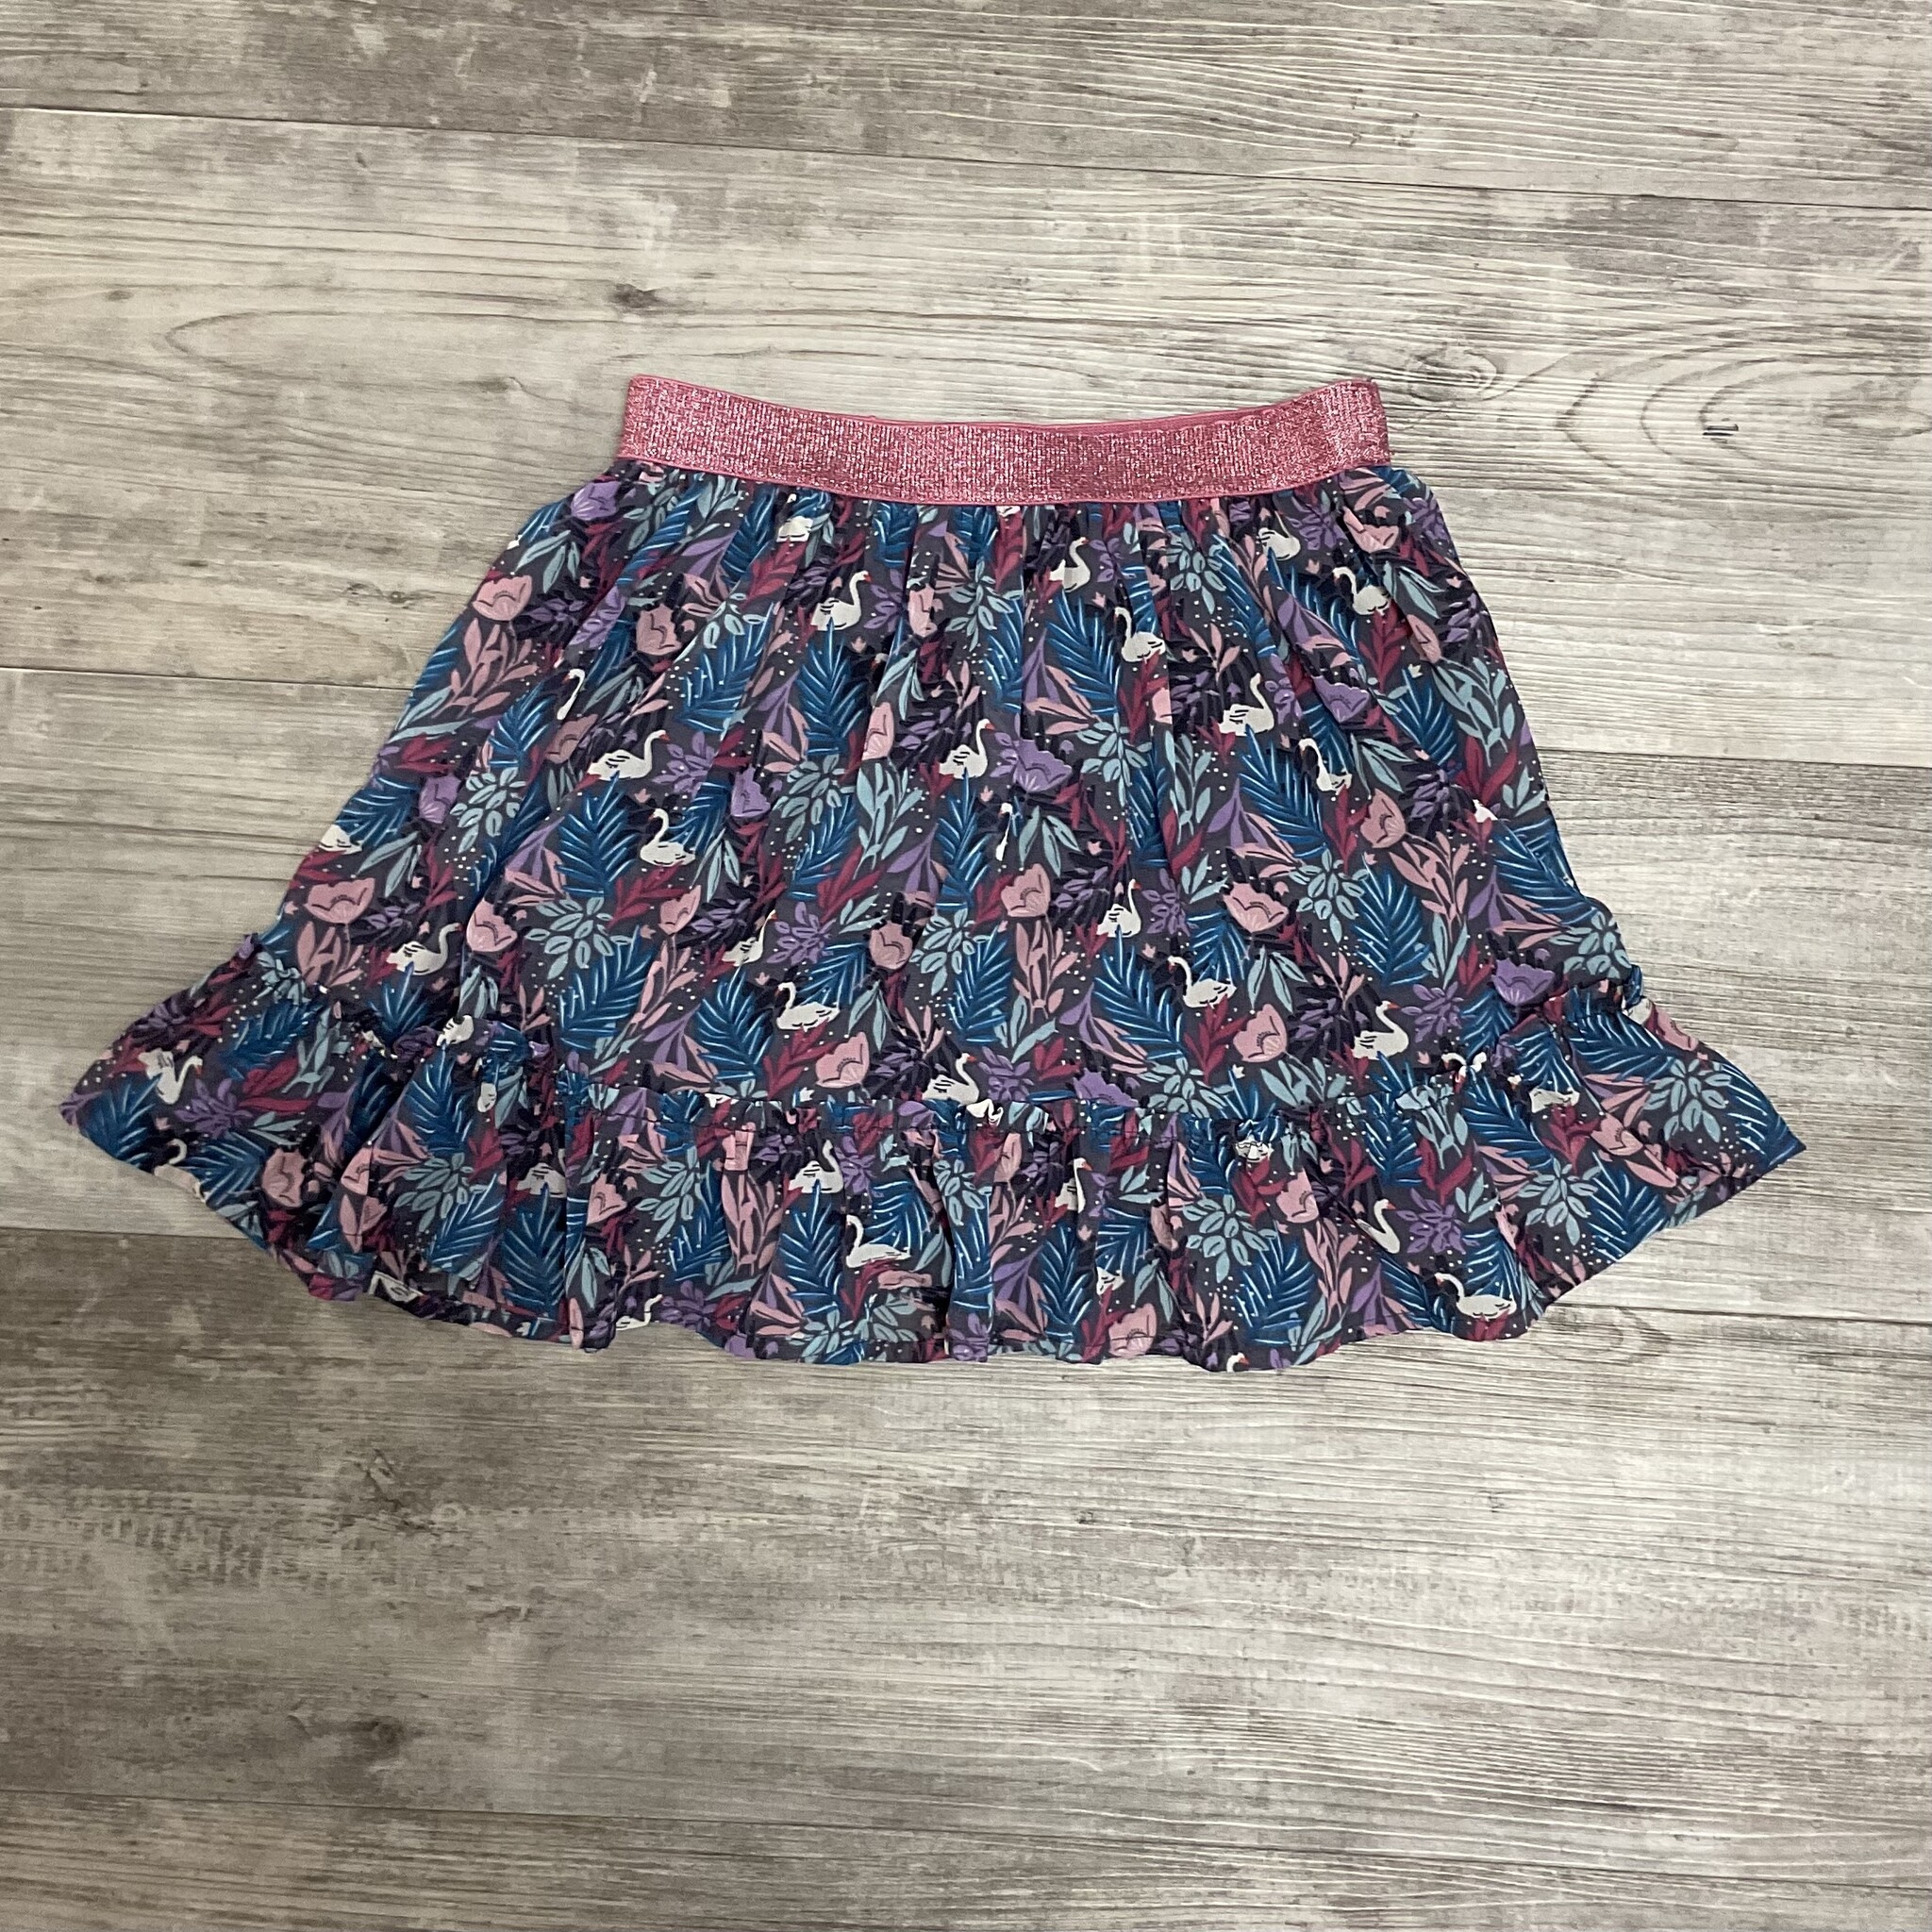 Chiffon Swan Print Skirt with Ruffle - Size 7-8Y